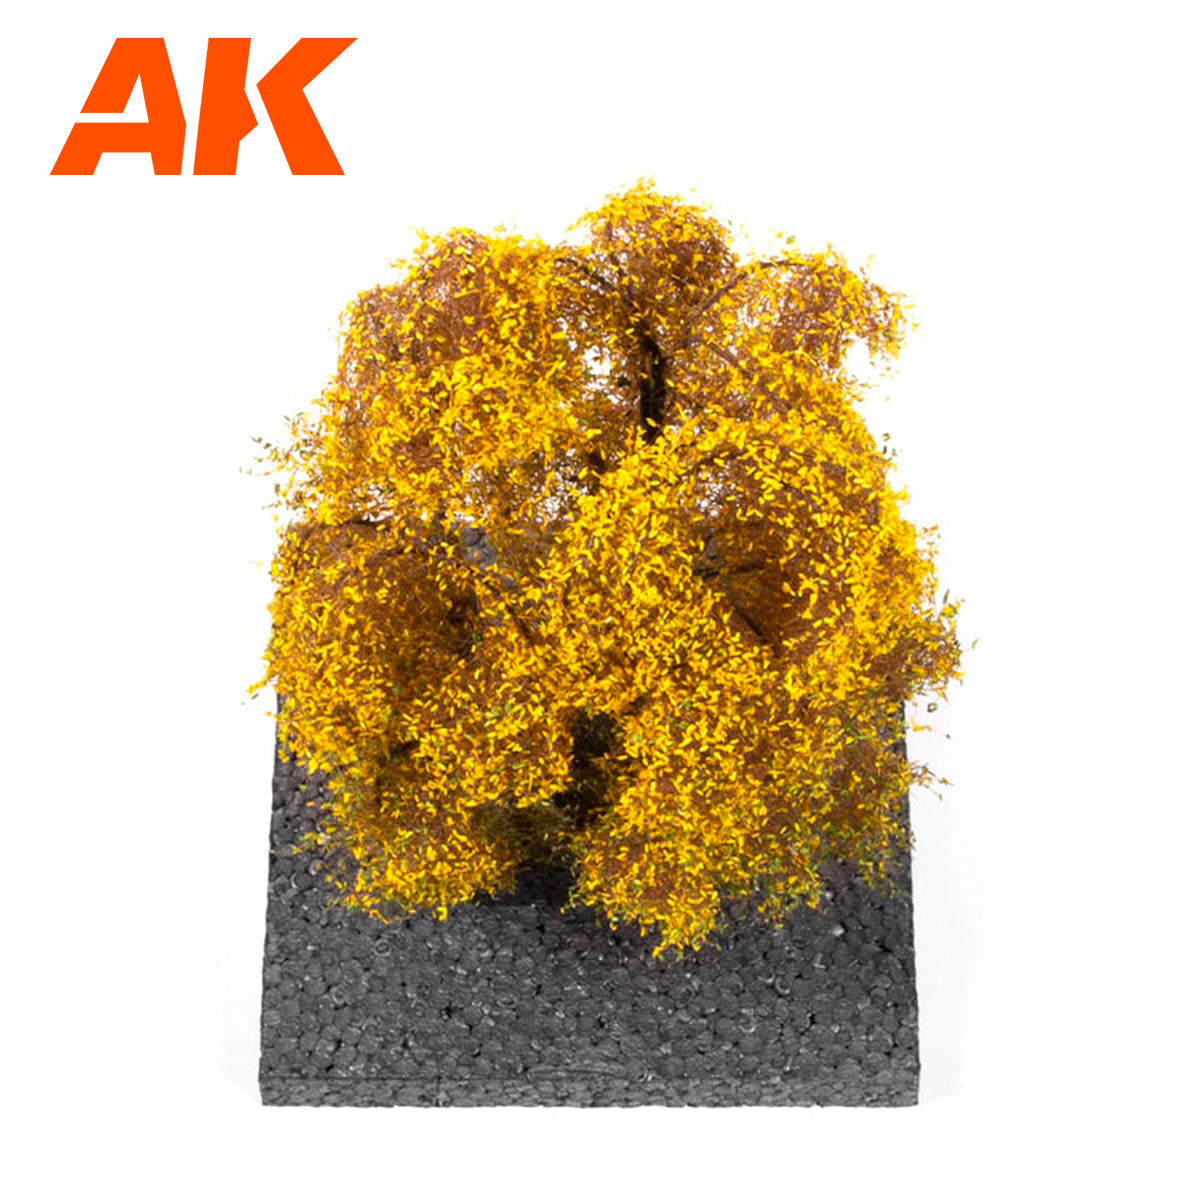 AK8186 - Weeping Willow Autumn Tree 1/72